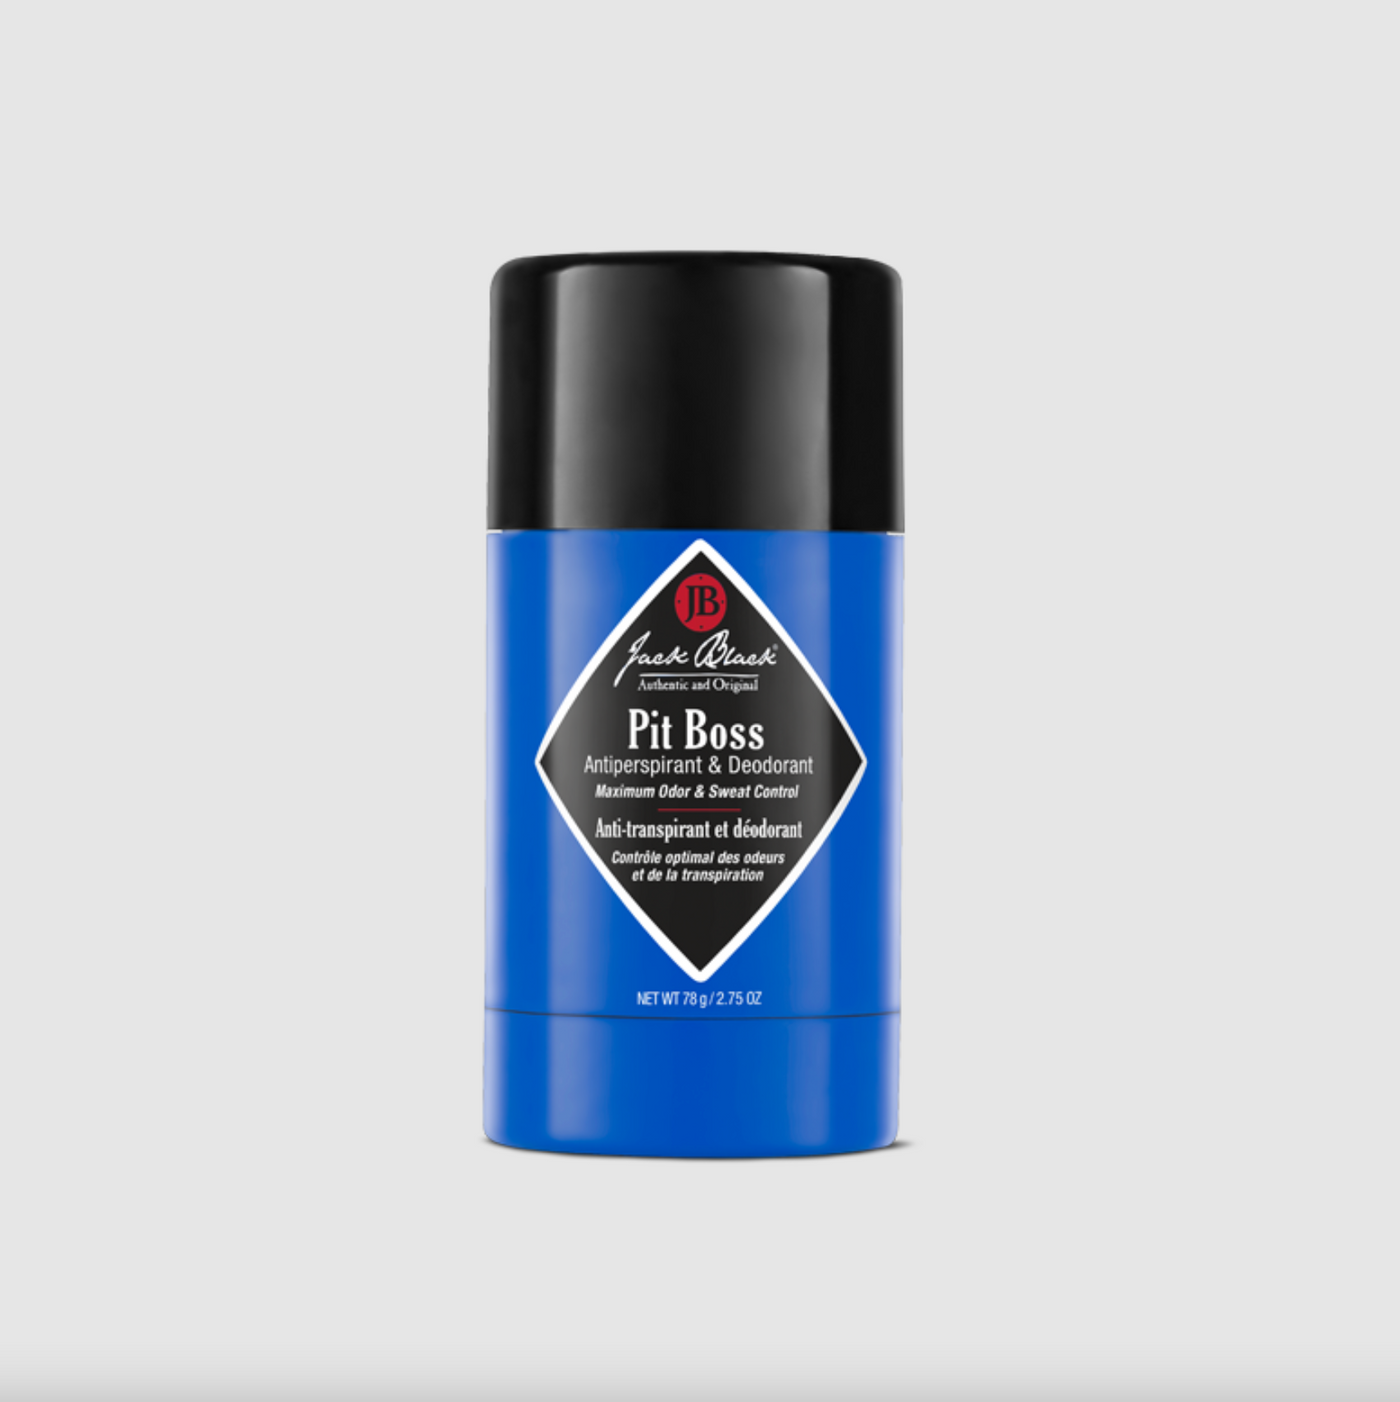 Jack Black - Pit Boss Antiperspirant & Deodorant - 2.75 oz